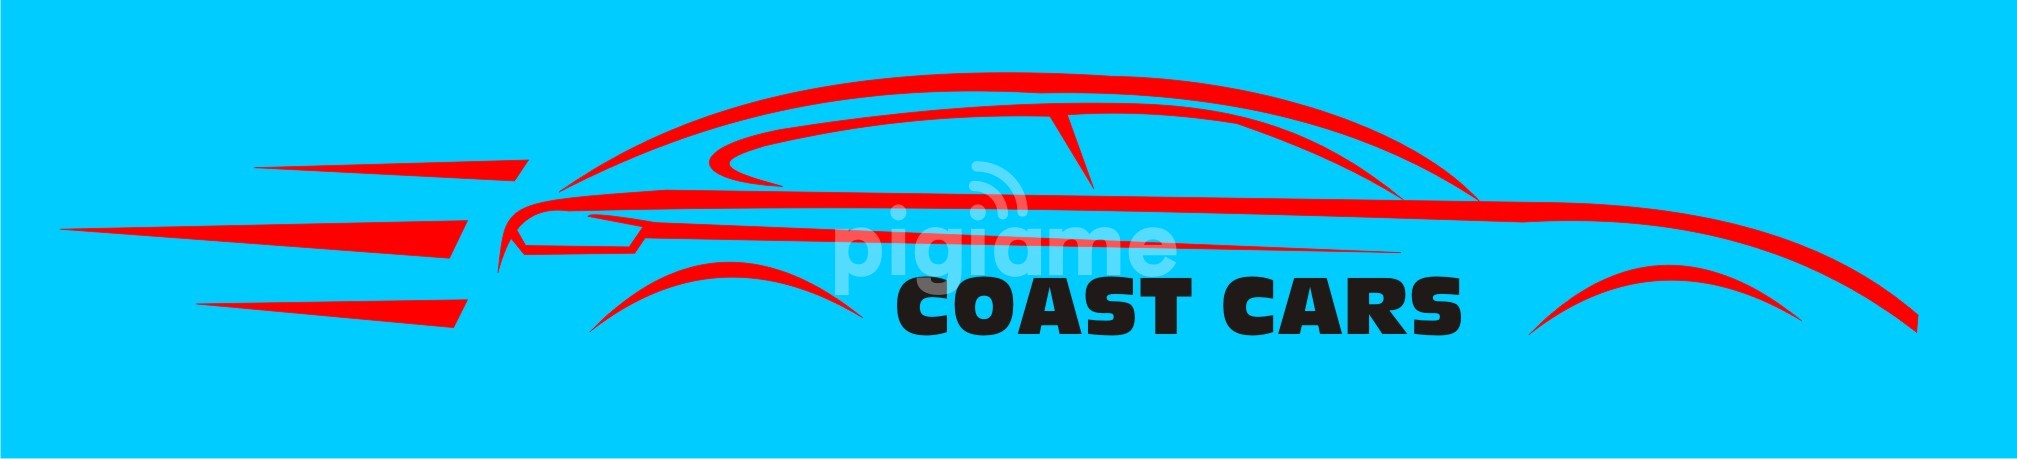 Coast cars Limited